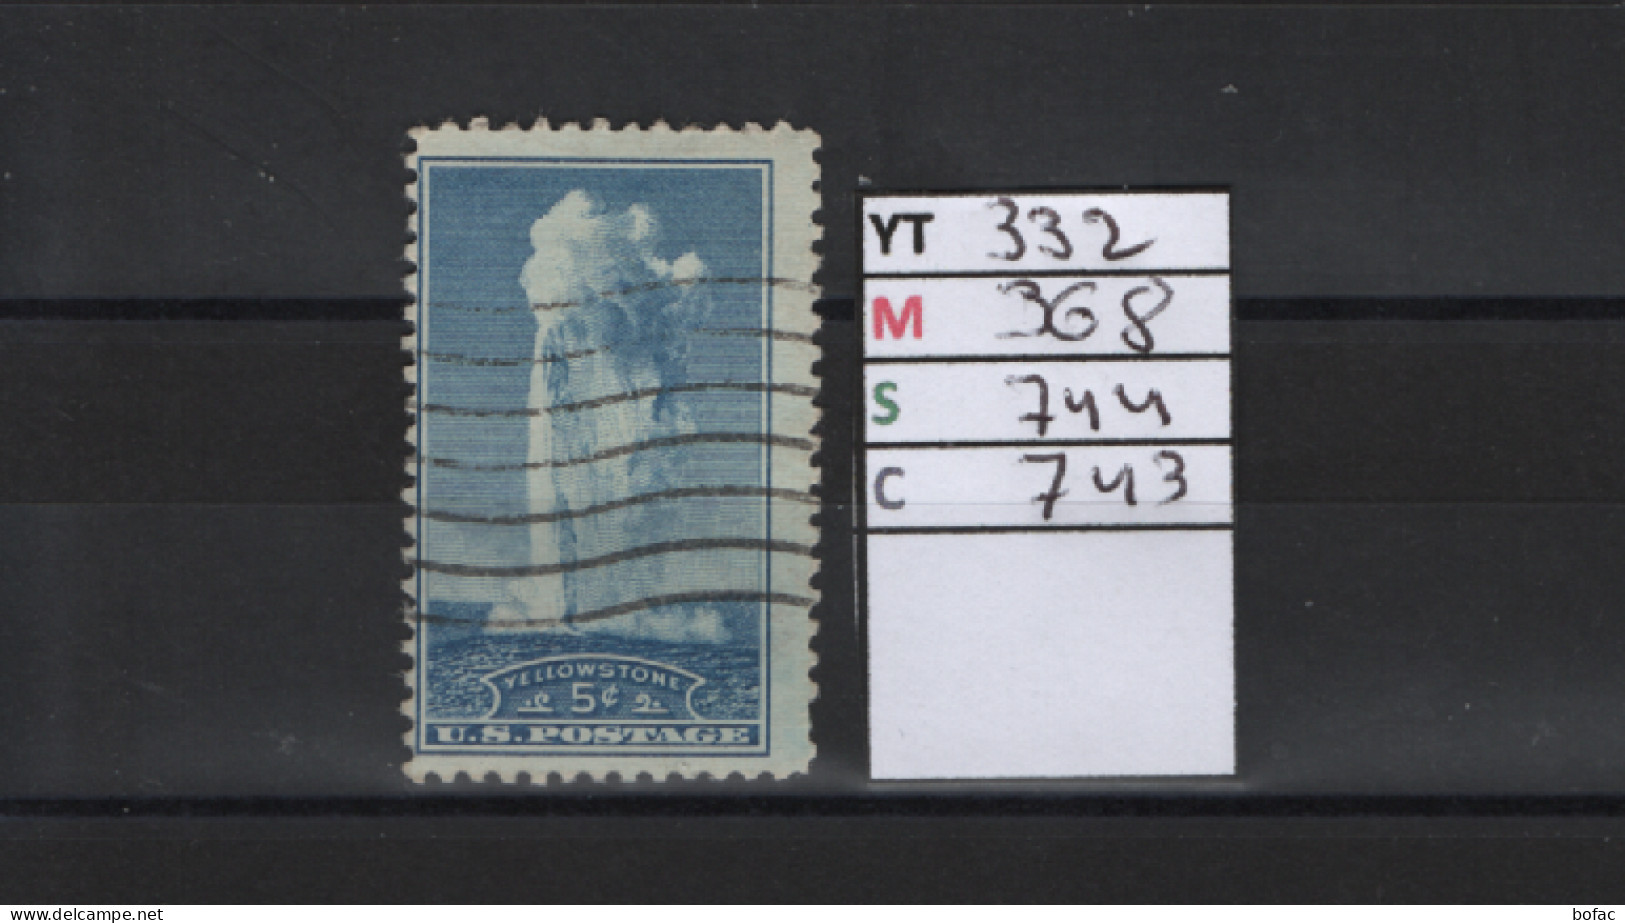 PRIX FIXE Obl 332 YT 368 MIC 744 SCSOT 743 GIB Geyser Wyoming 1934 Etats Unis 58A/01 - Used Stamps